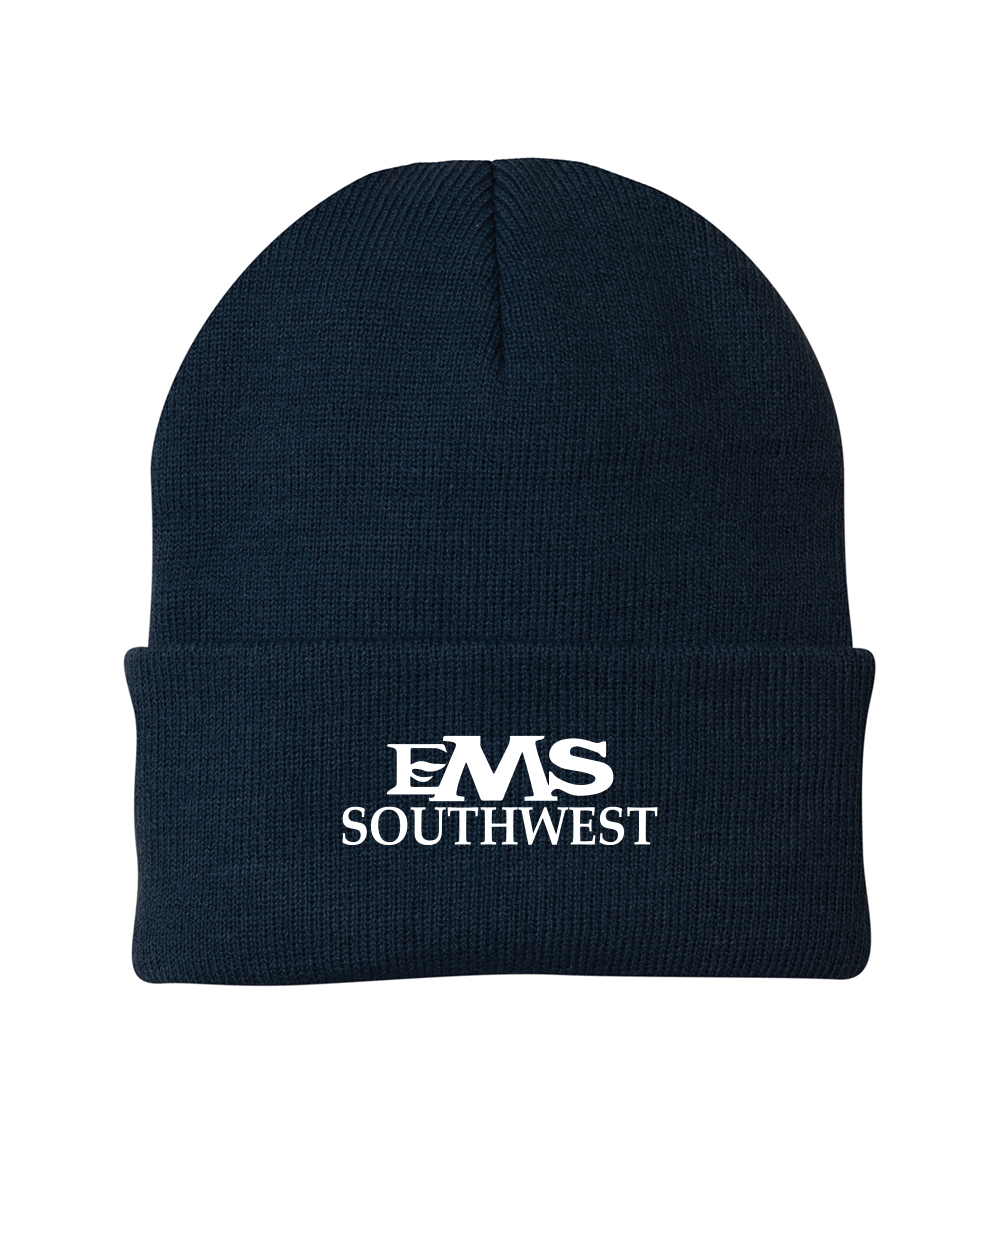 EMS Southwest - Port & Company Knit Cap